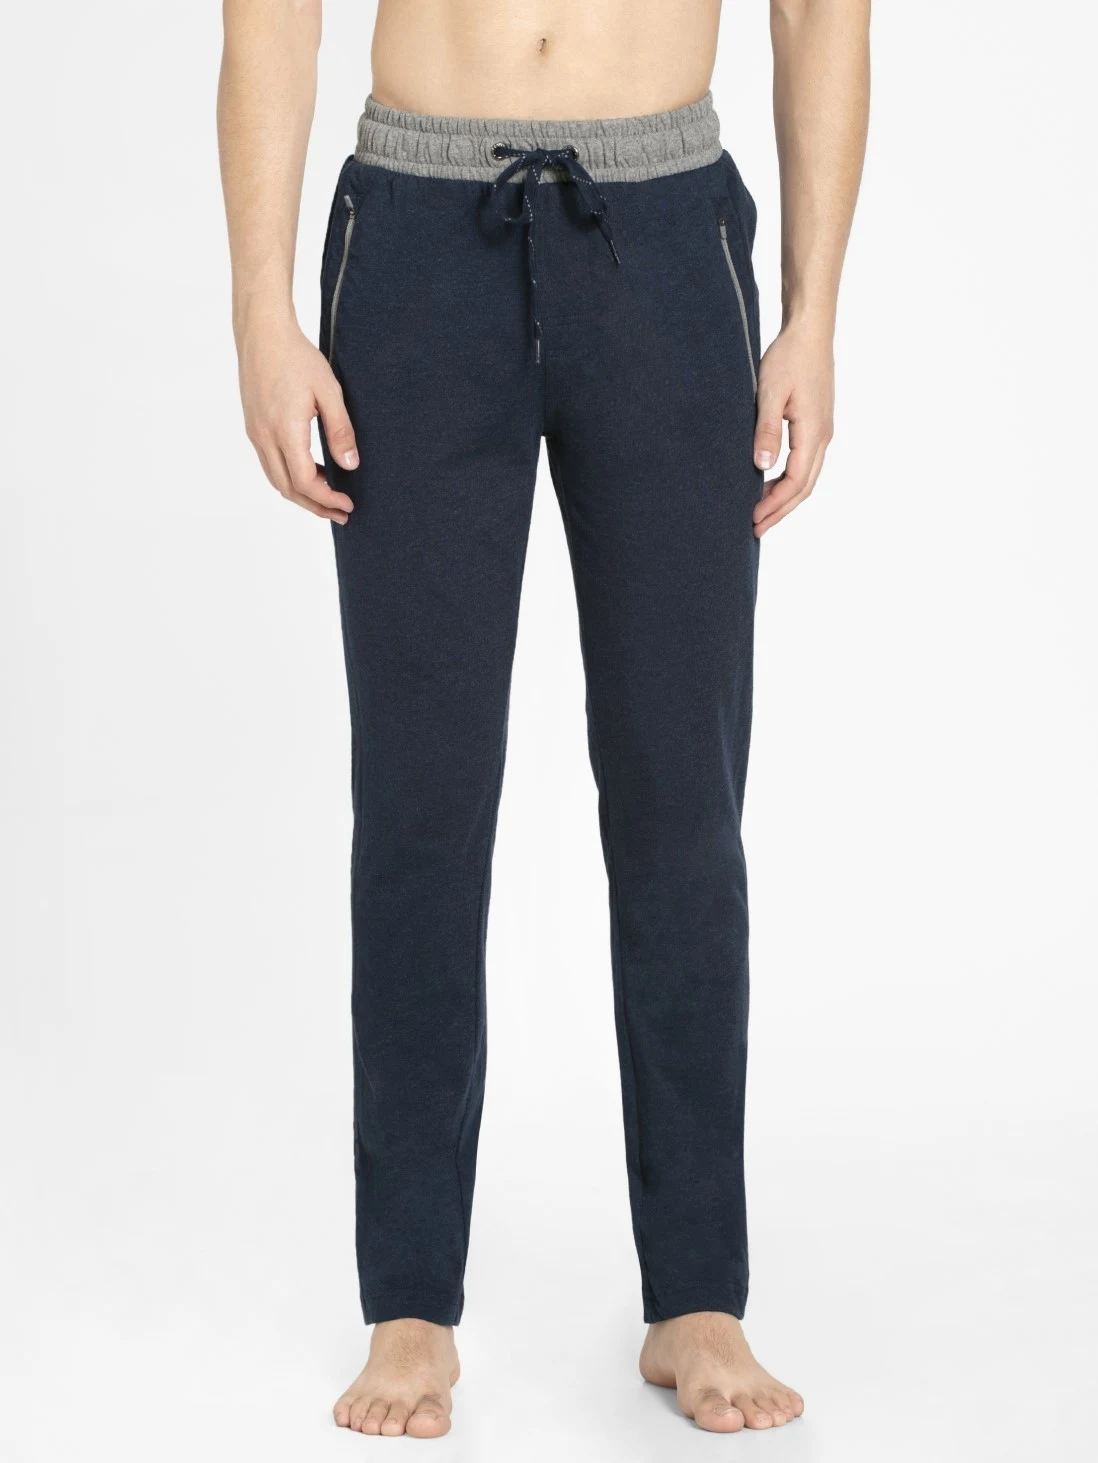 Mens Track Pant Night Pant Pajama Regular fit pant. Zipper Pocket both  Side.Stylish Stretchable Solid